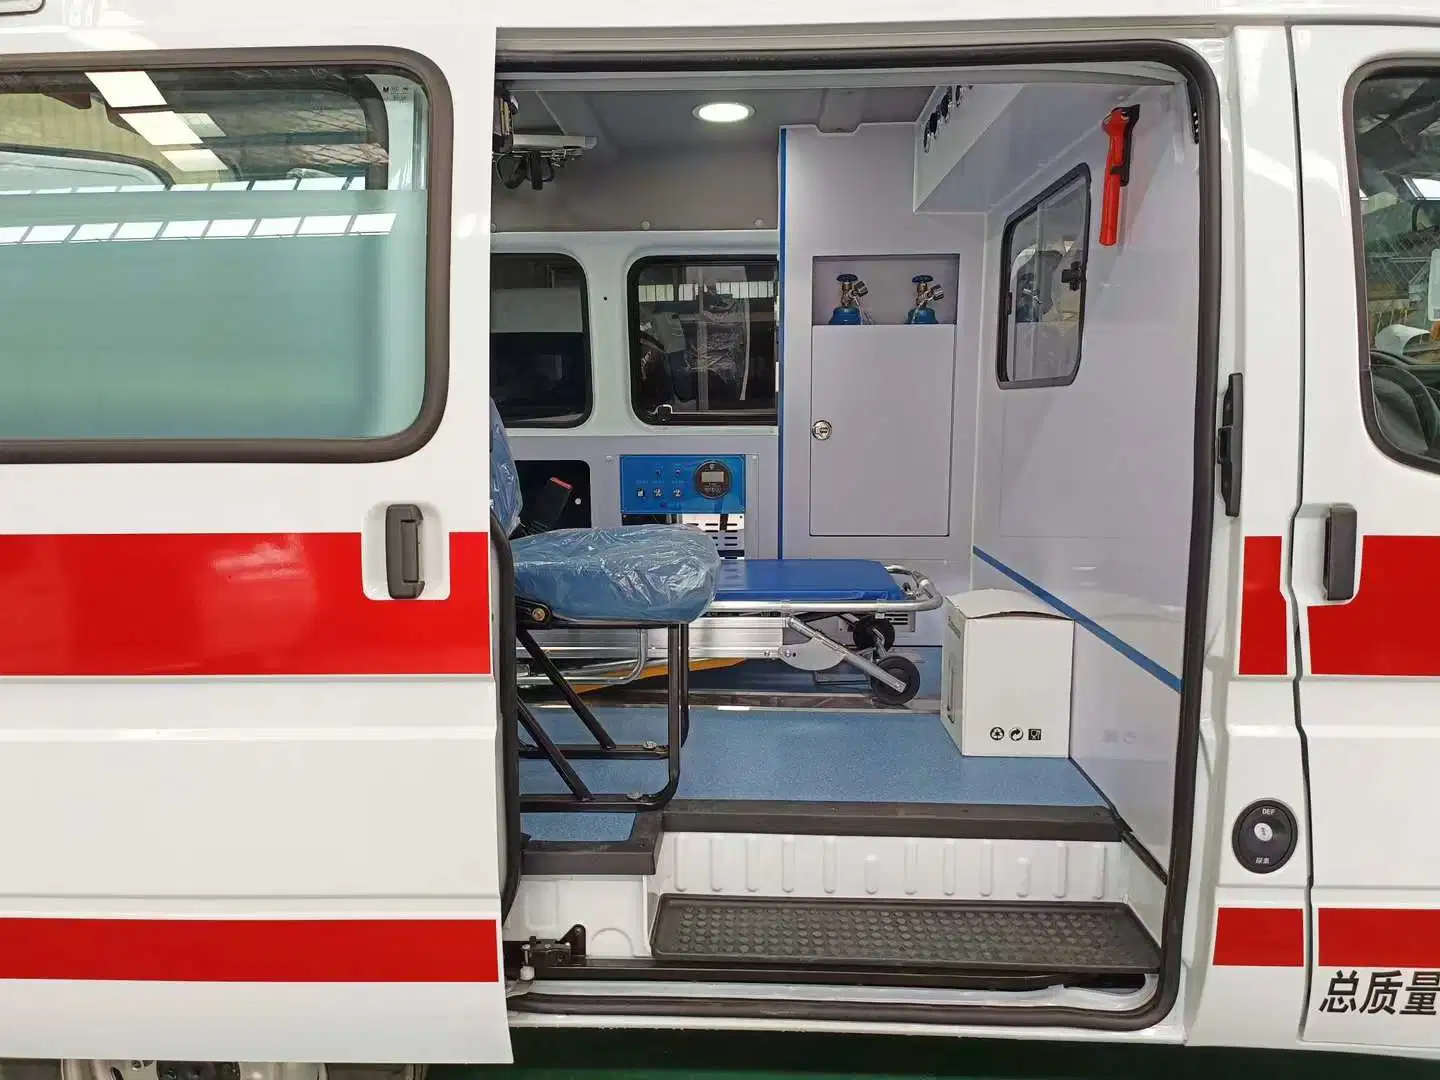 Original Factory Ambulance First Aid Medical Hospital Emergency Ambulance